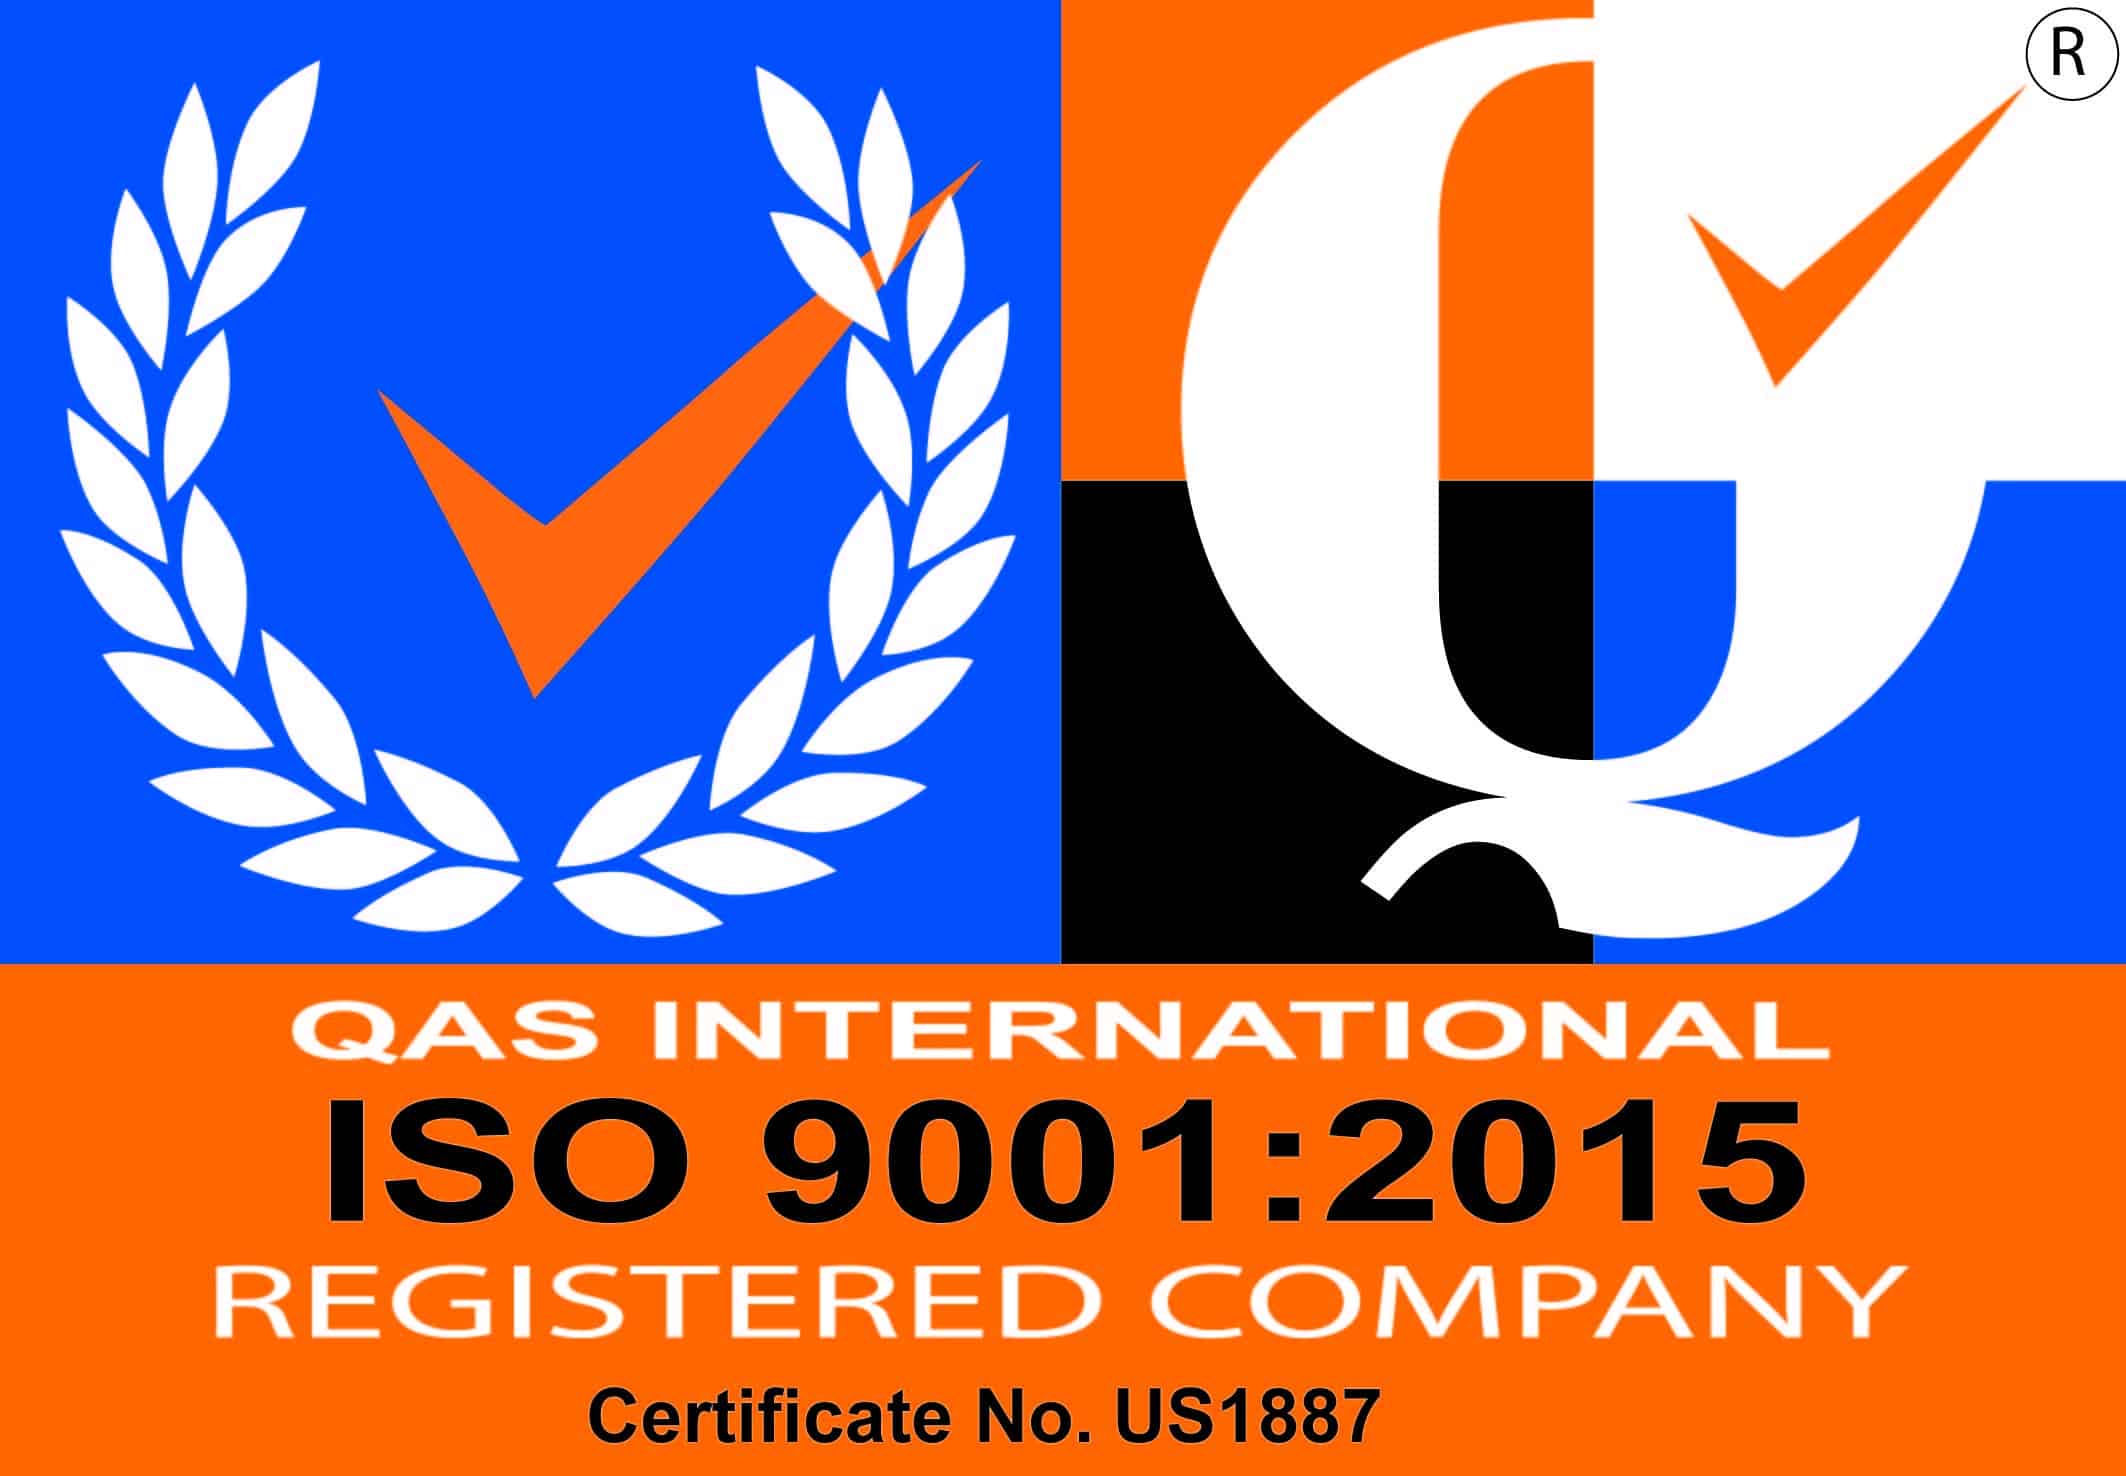 ISO 9000 Certification Logo